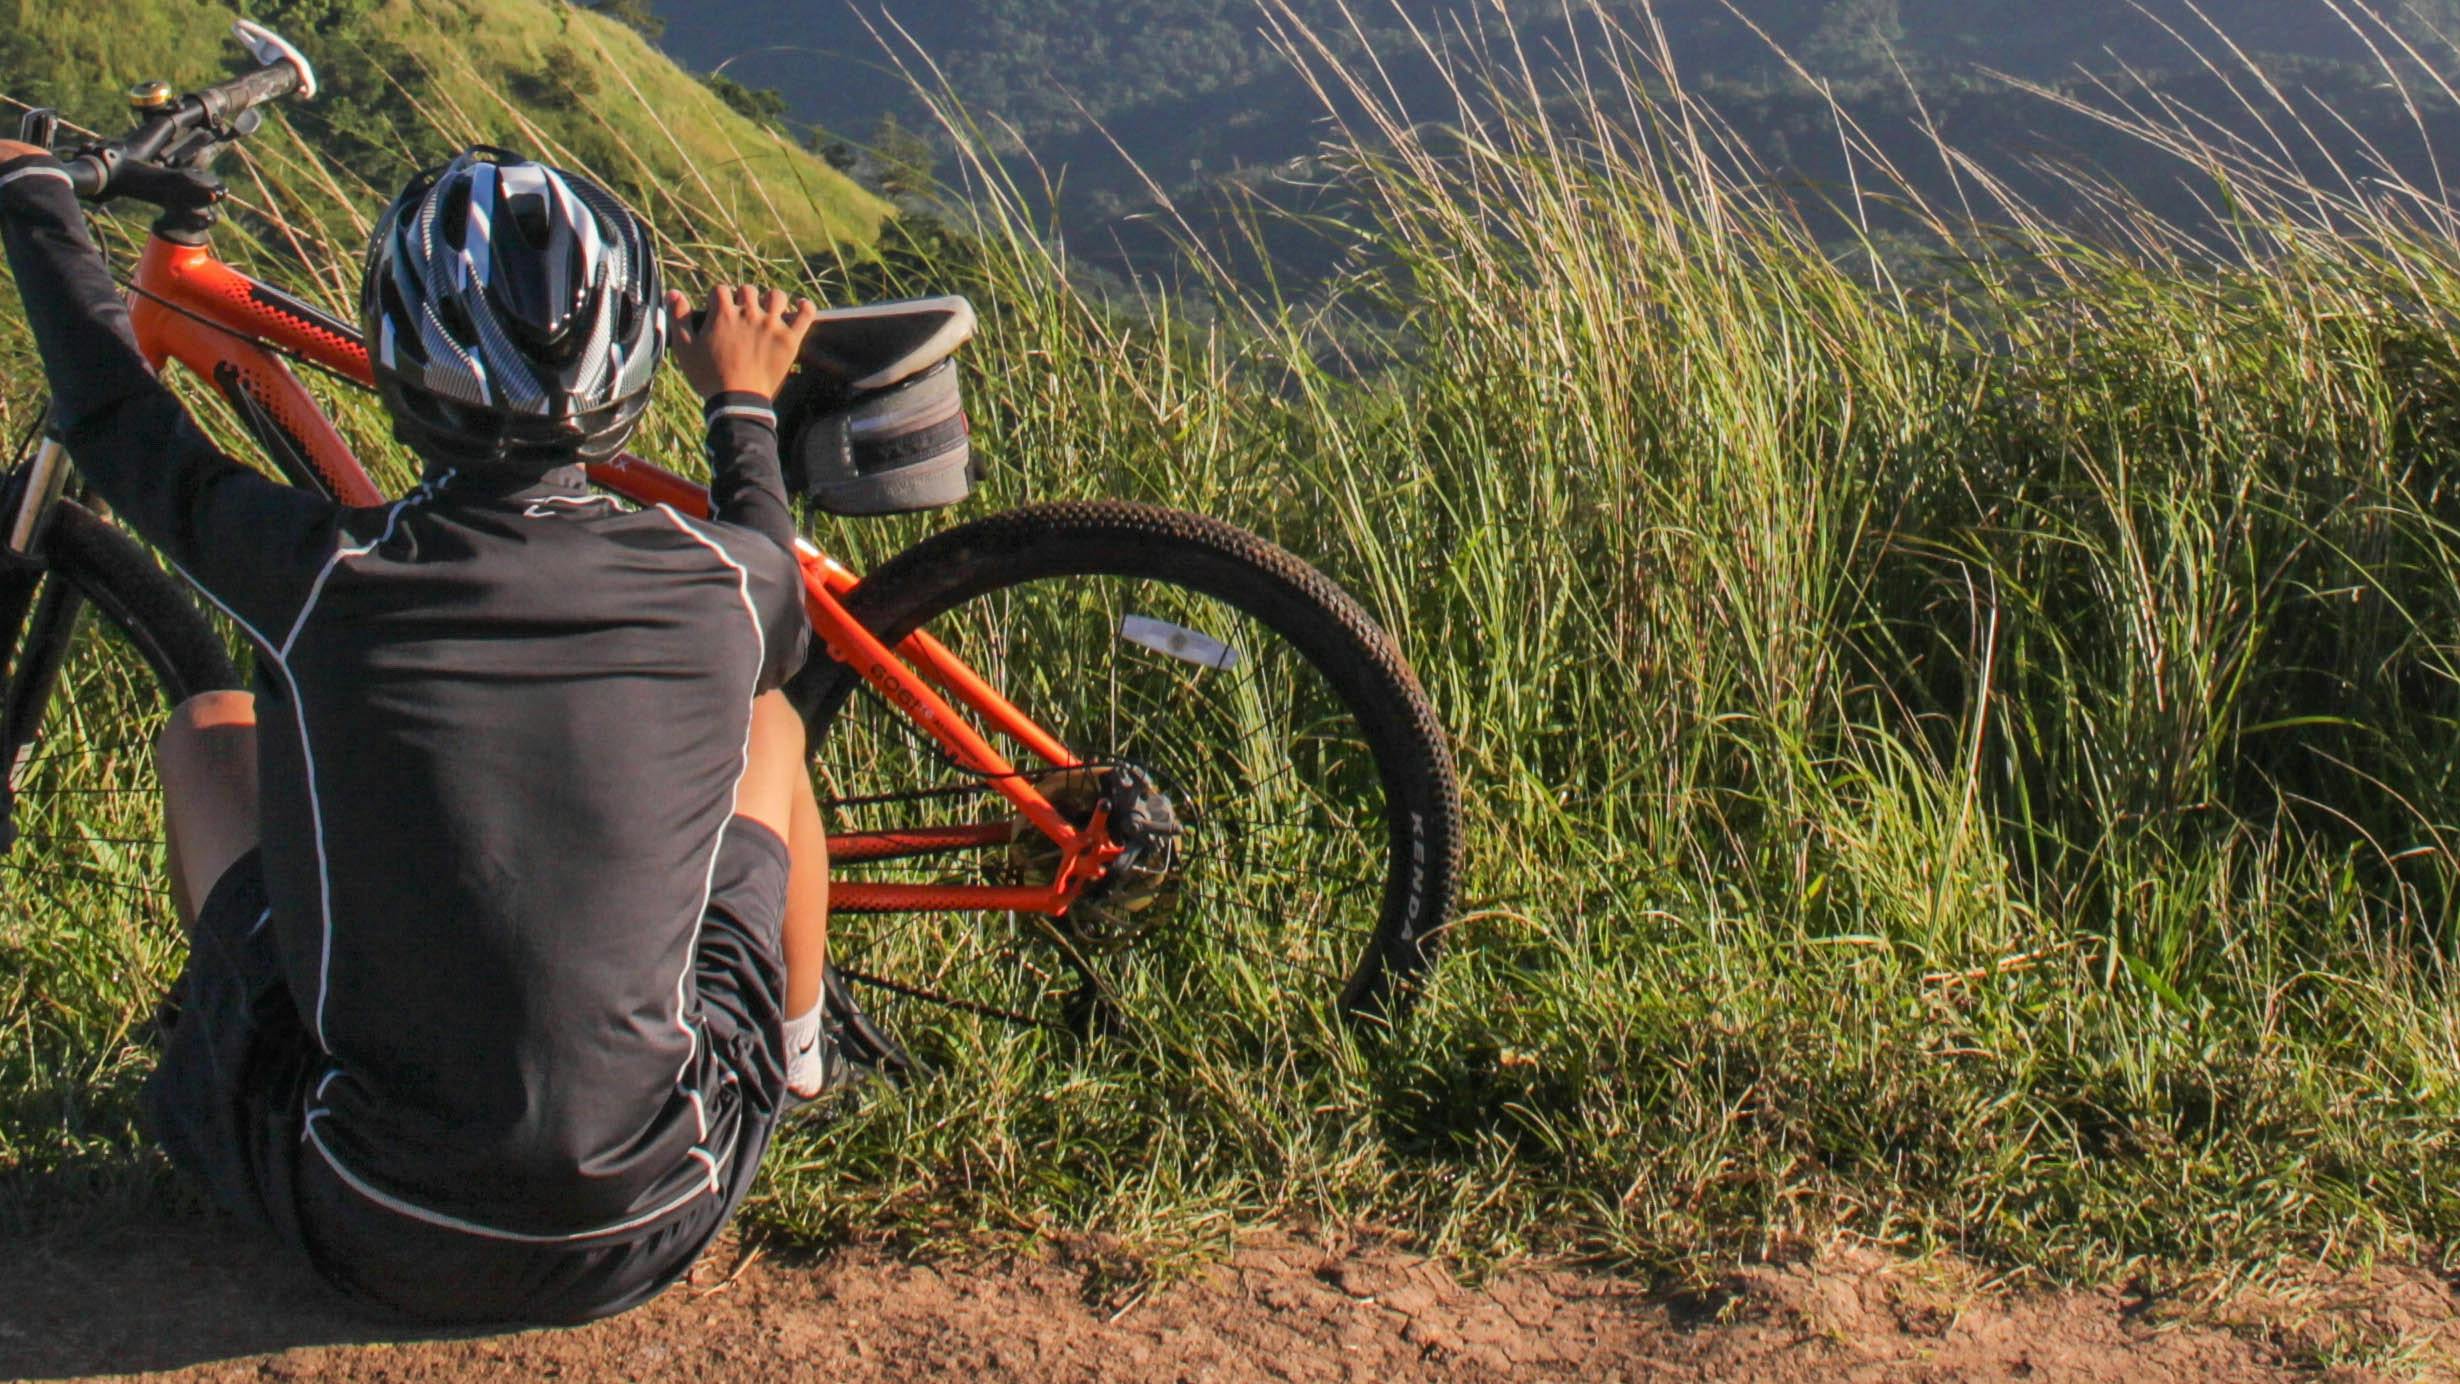 A cyclist sits on the ground next to his orange mountain bike